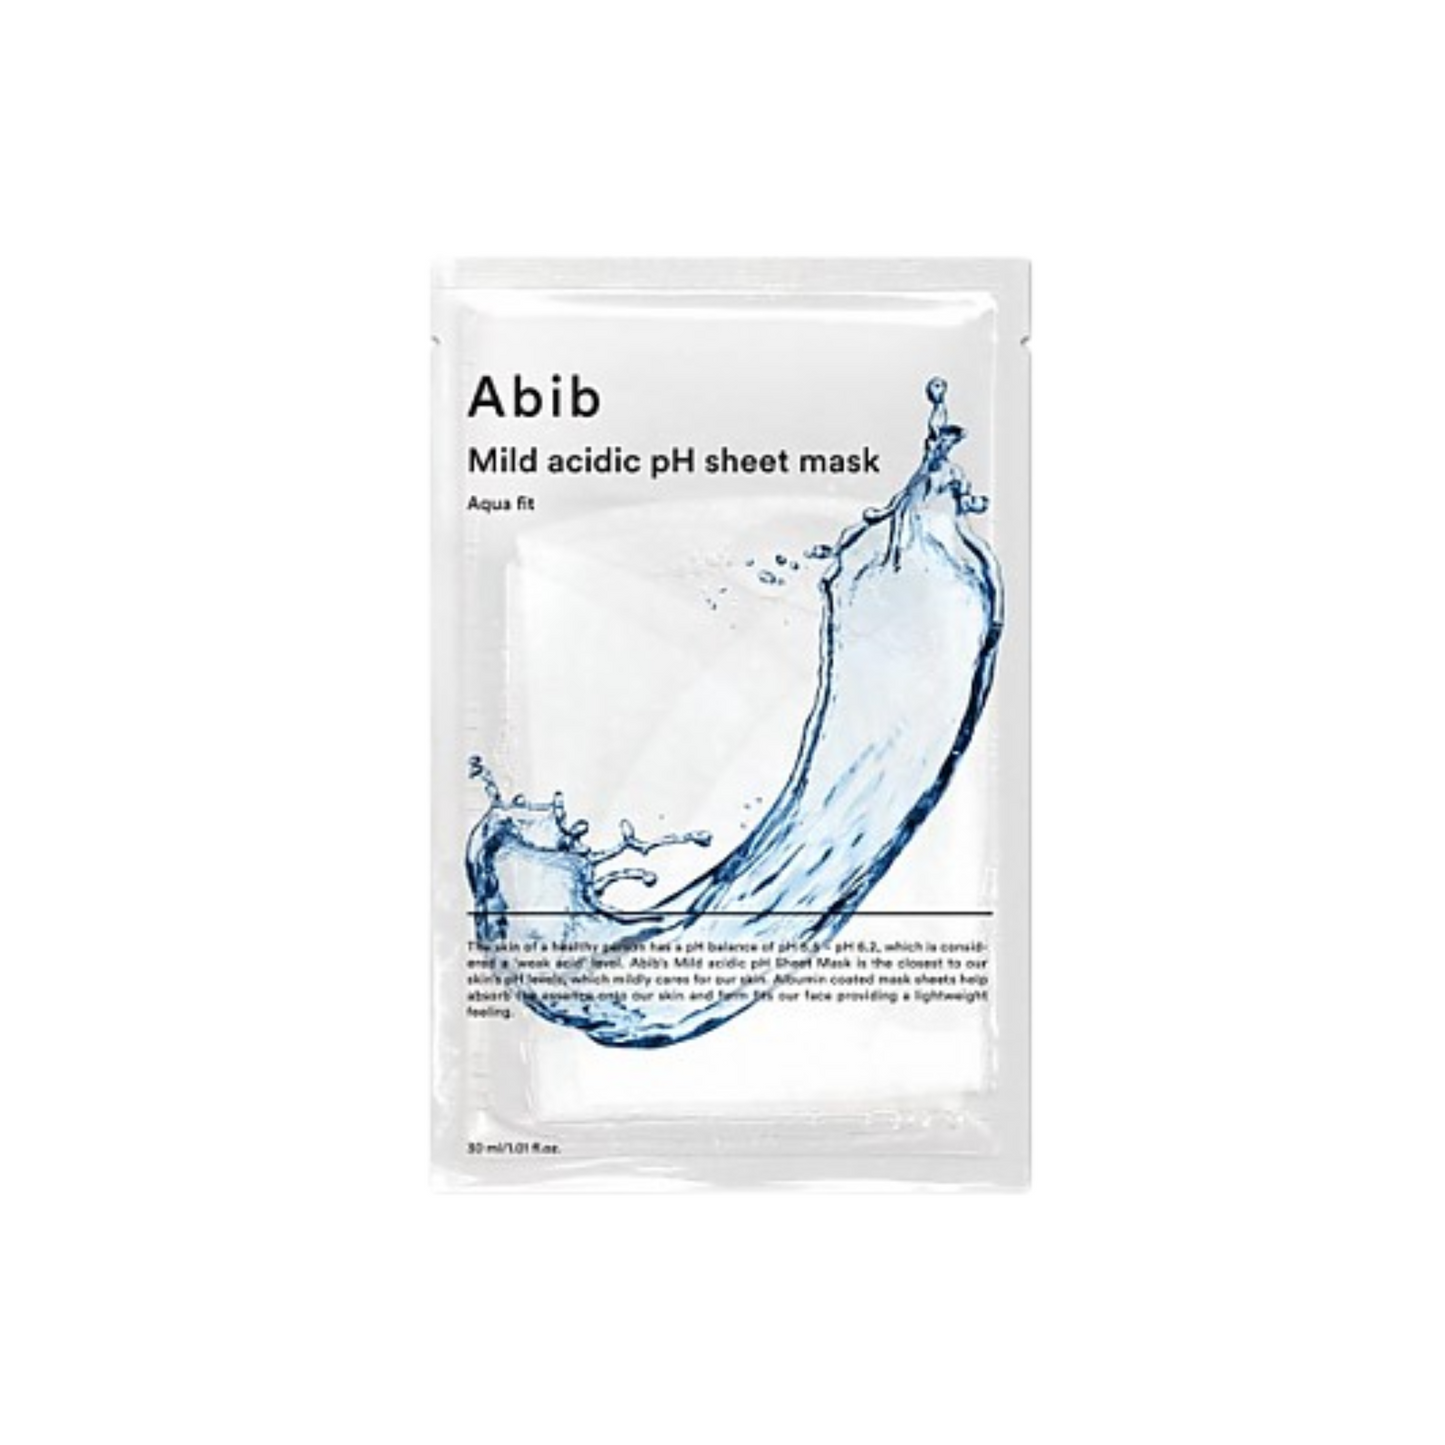 ABIB Mild Acidic pH Sheet Mask Aqua Fit